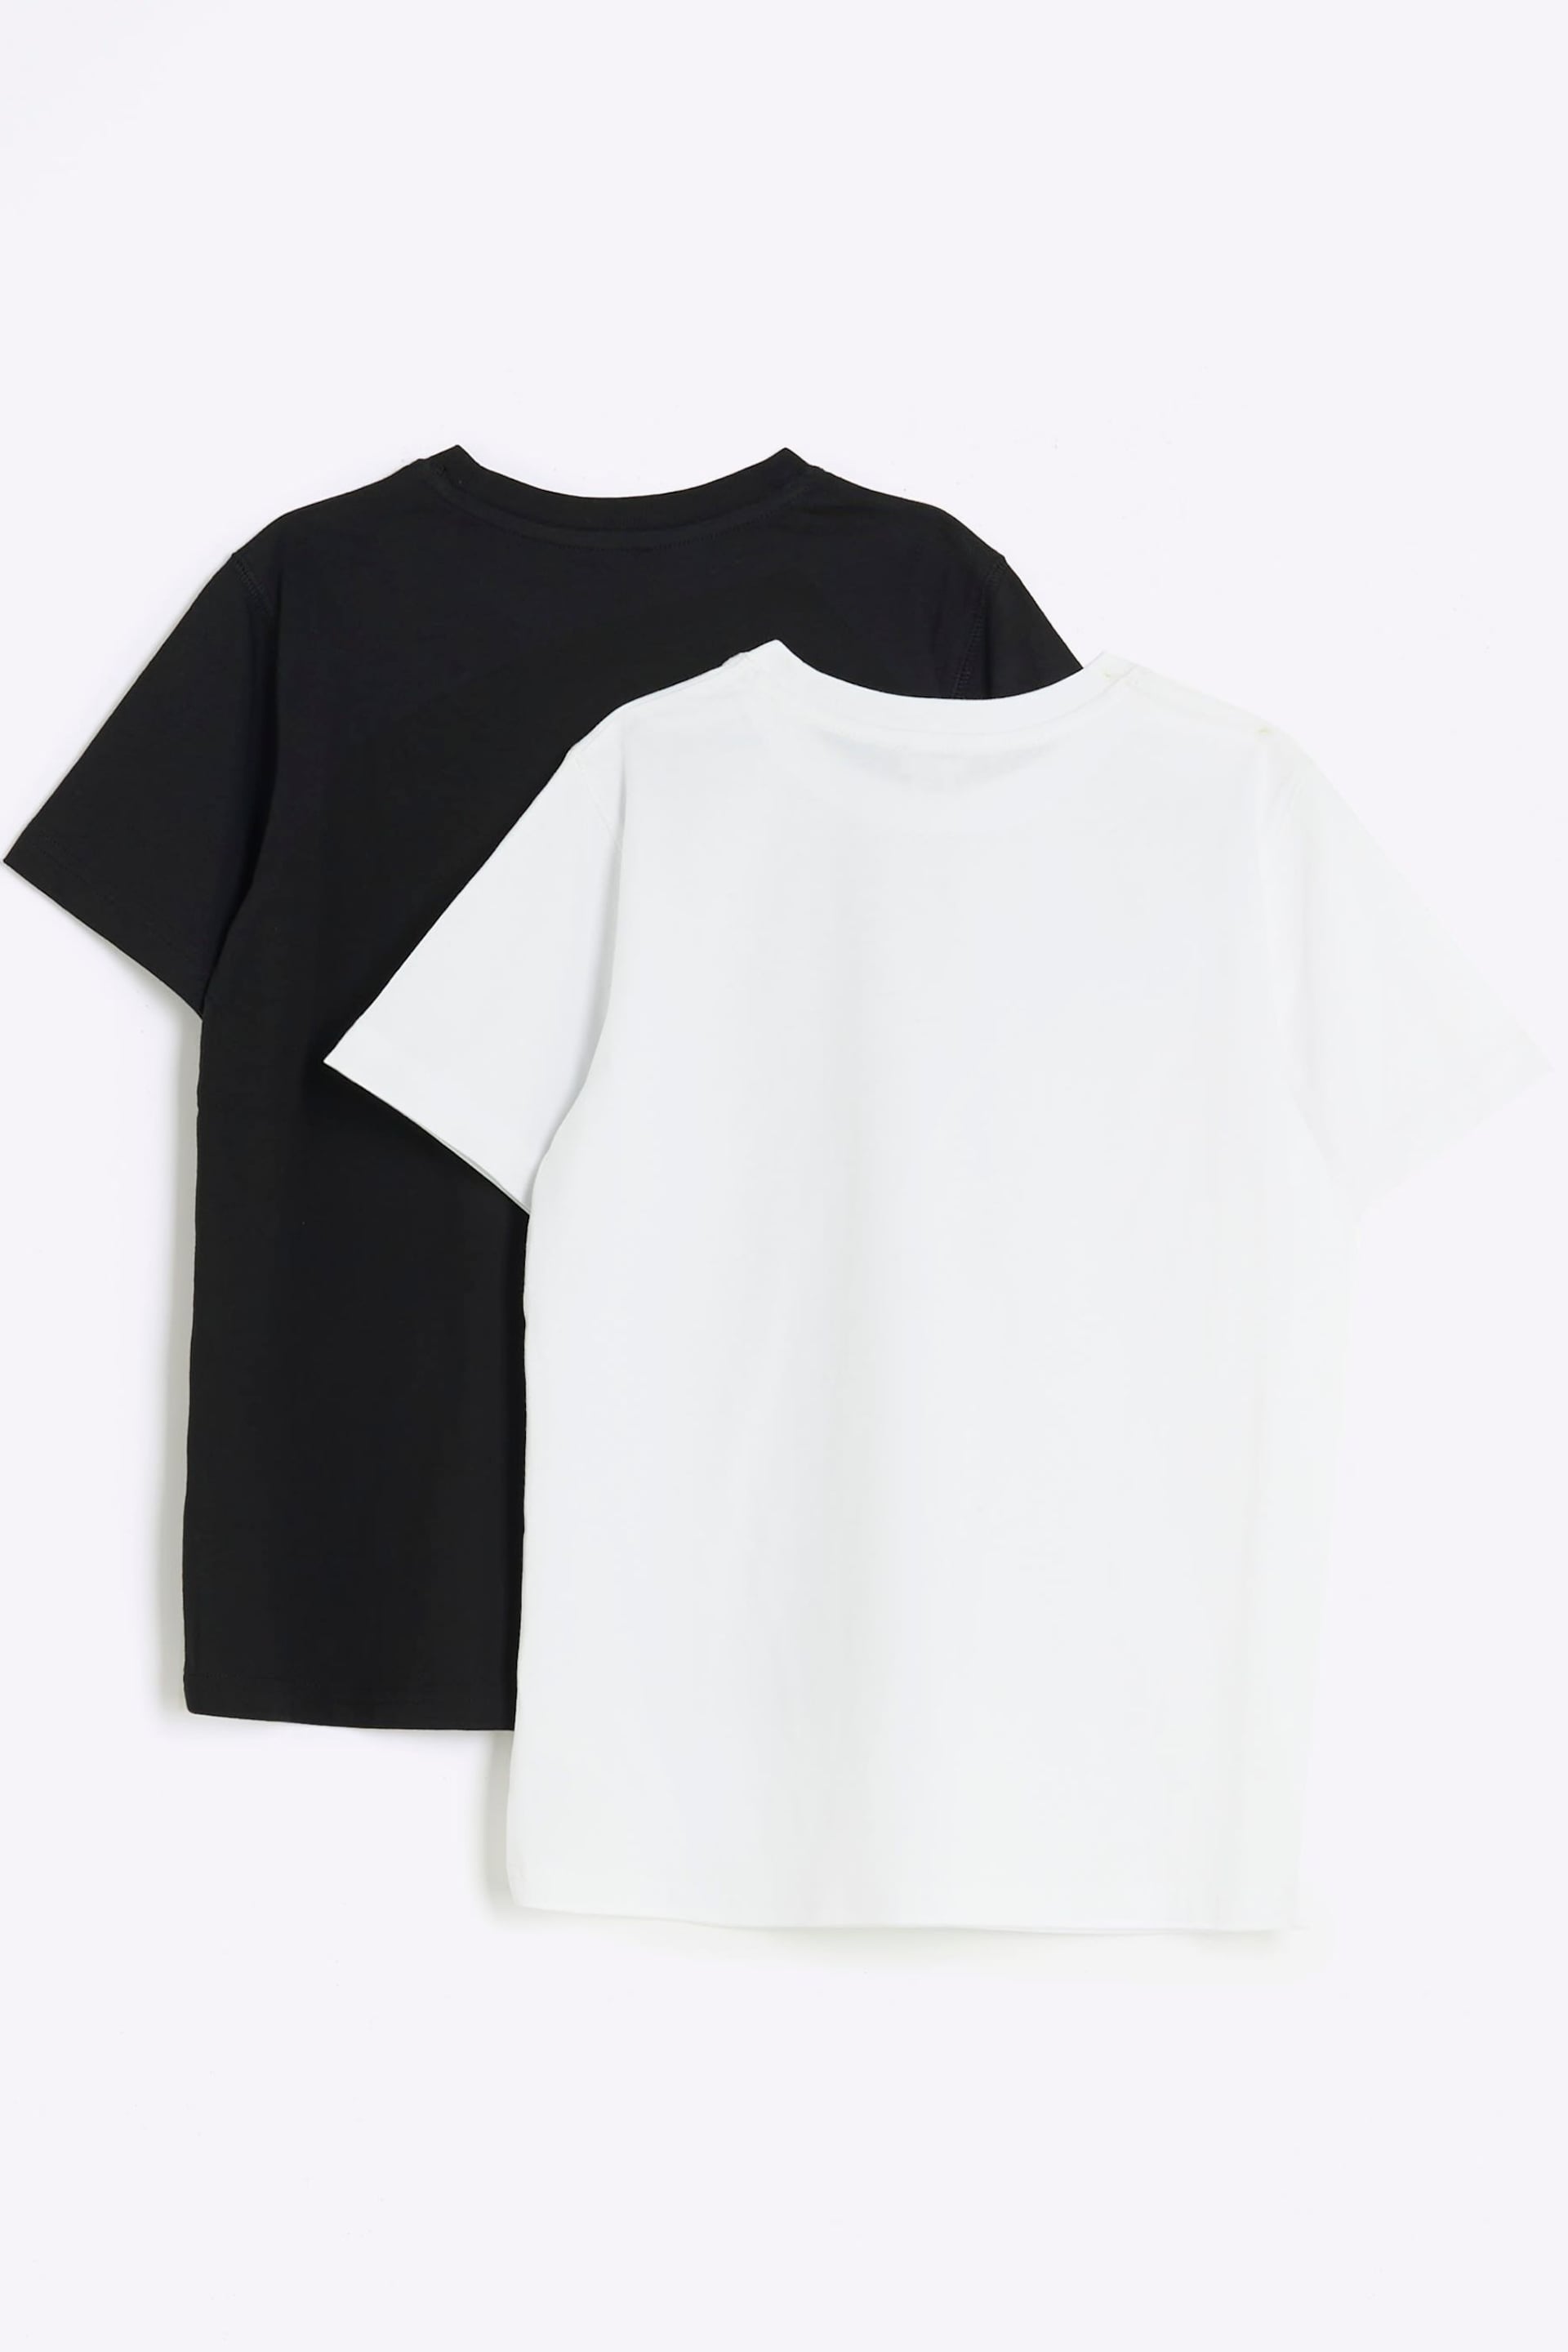 River Island White Boys T-Shirt 2 Packs - Image 2 of 3